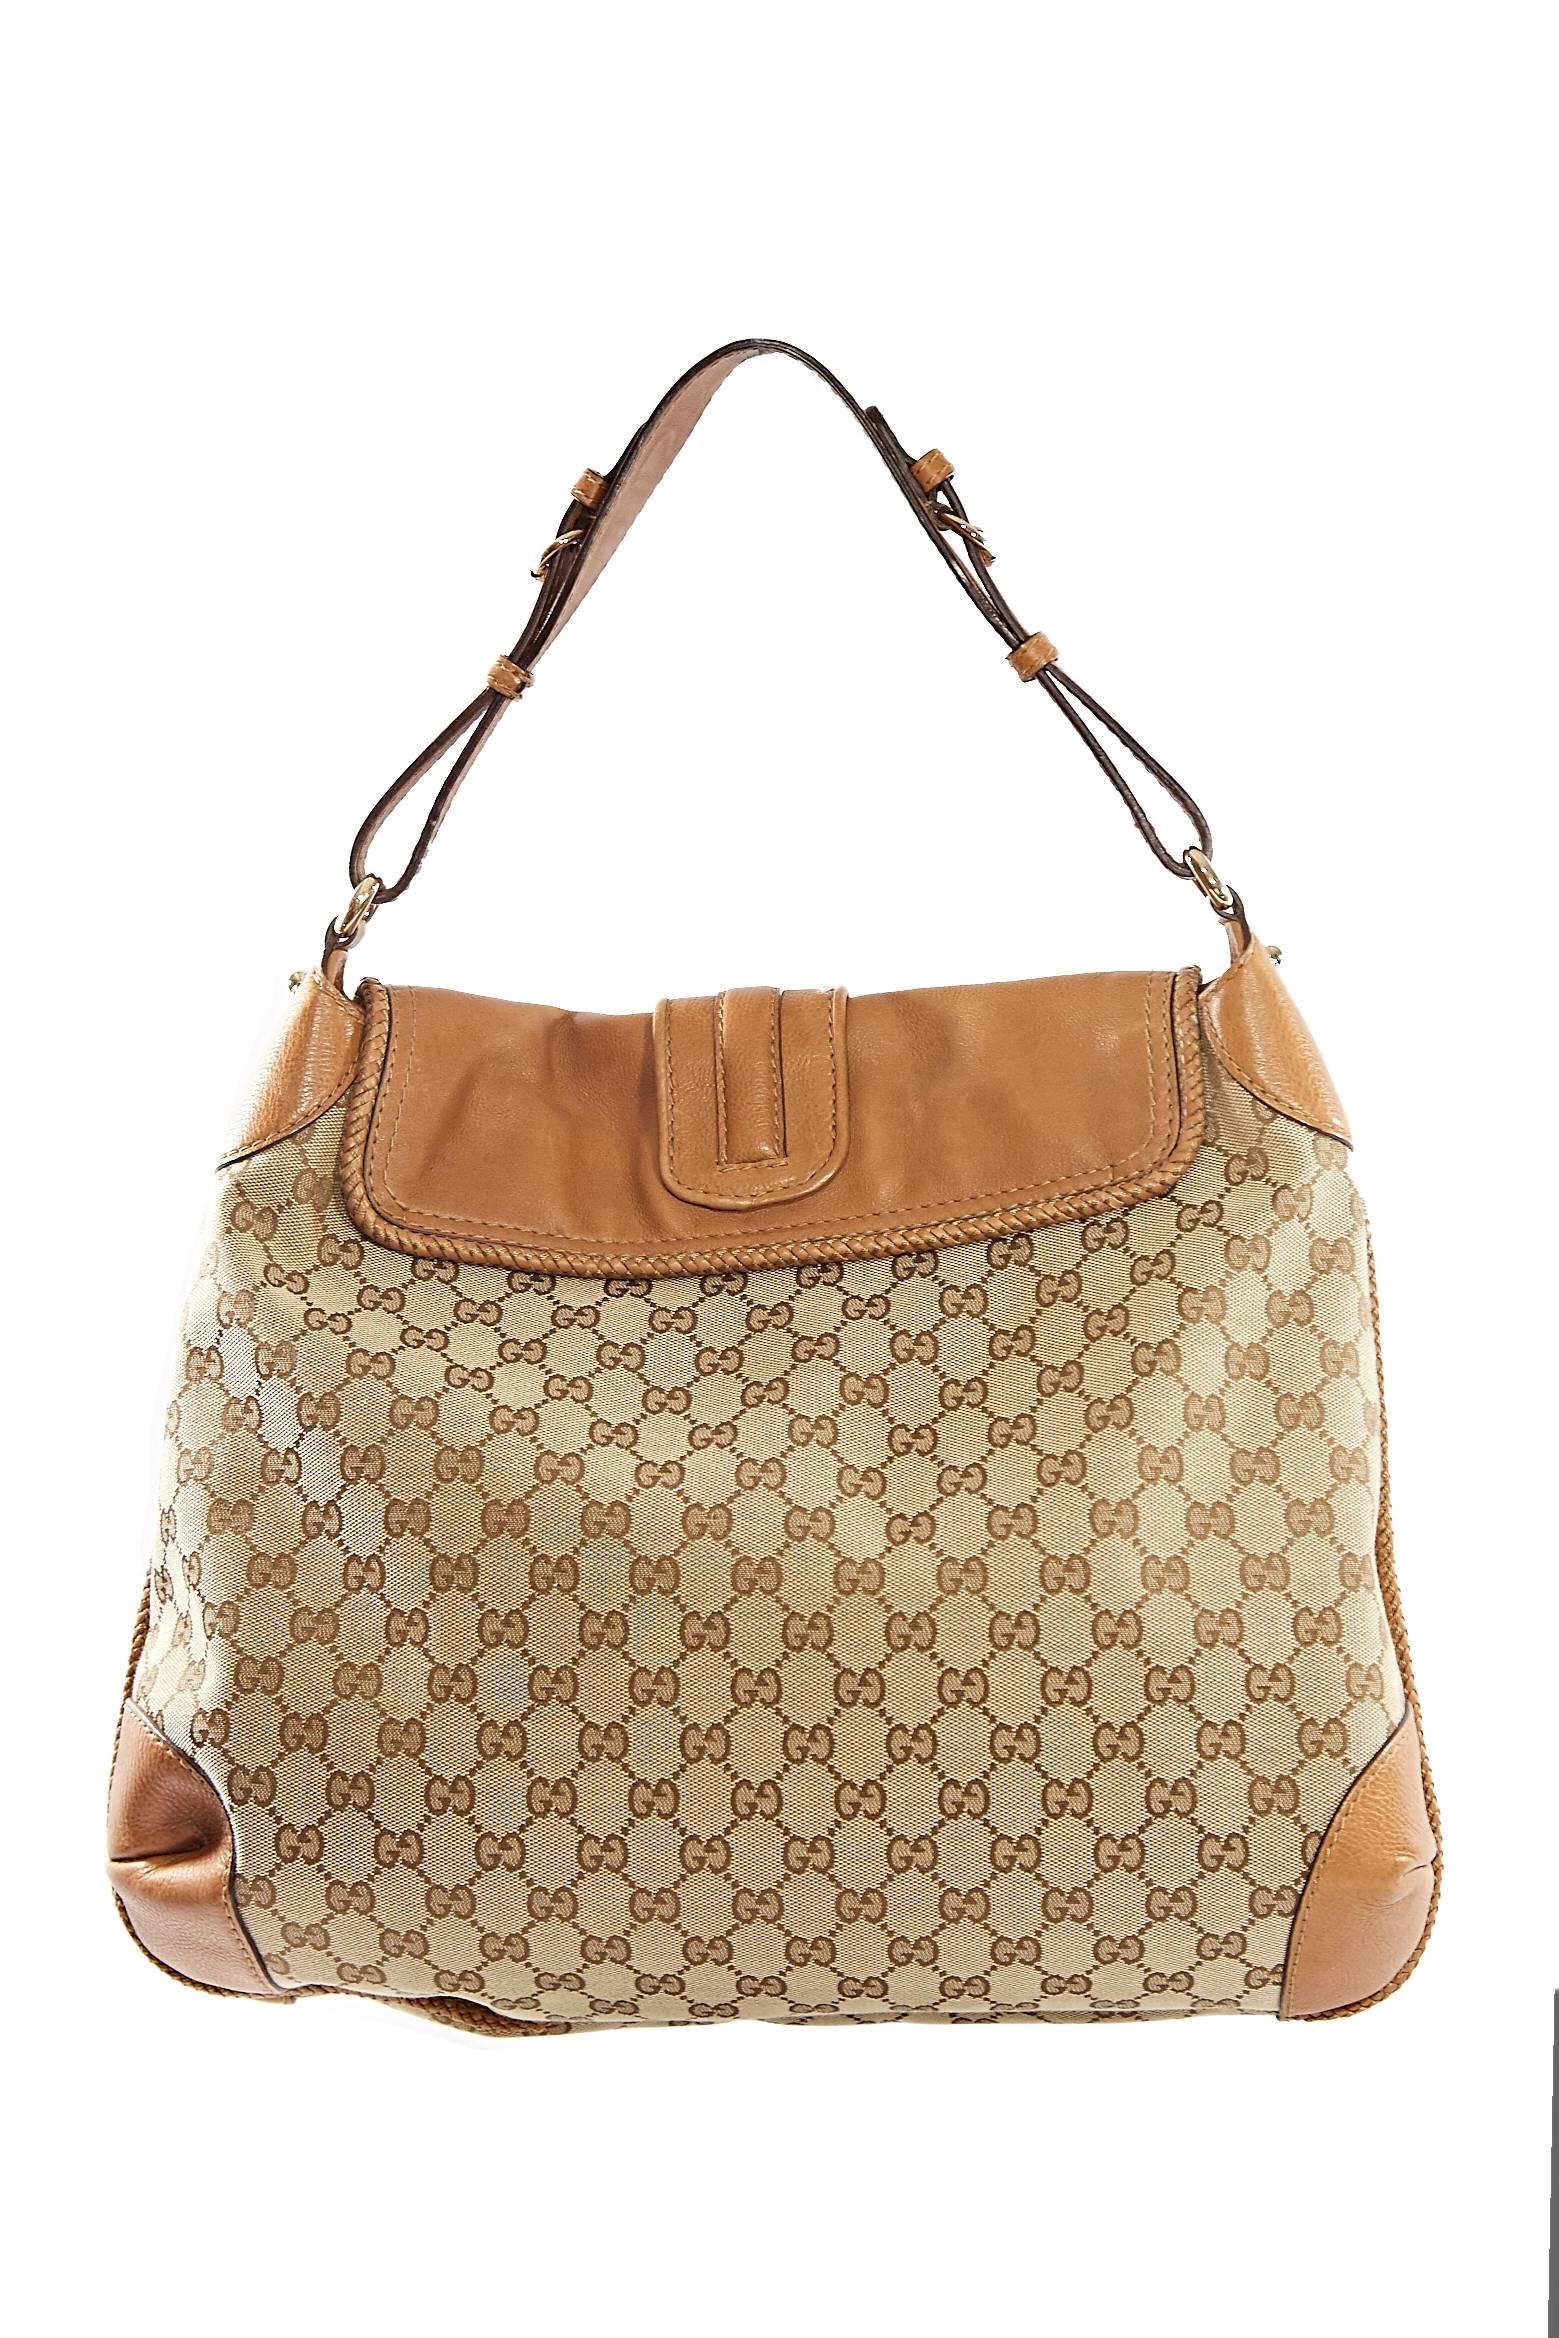 Gucci Tan Canvas Monogram Bag. Tan leather trim, braided detail. Hobo style.